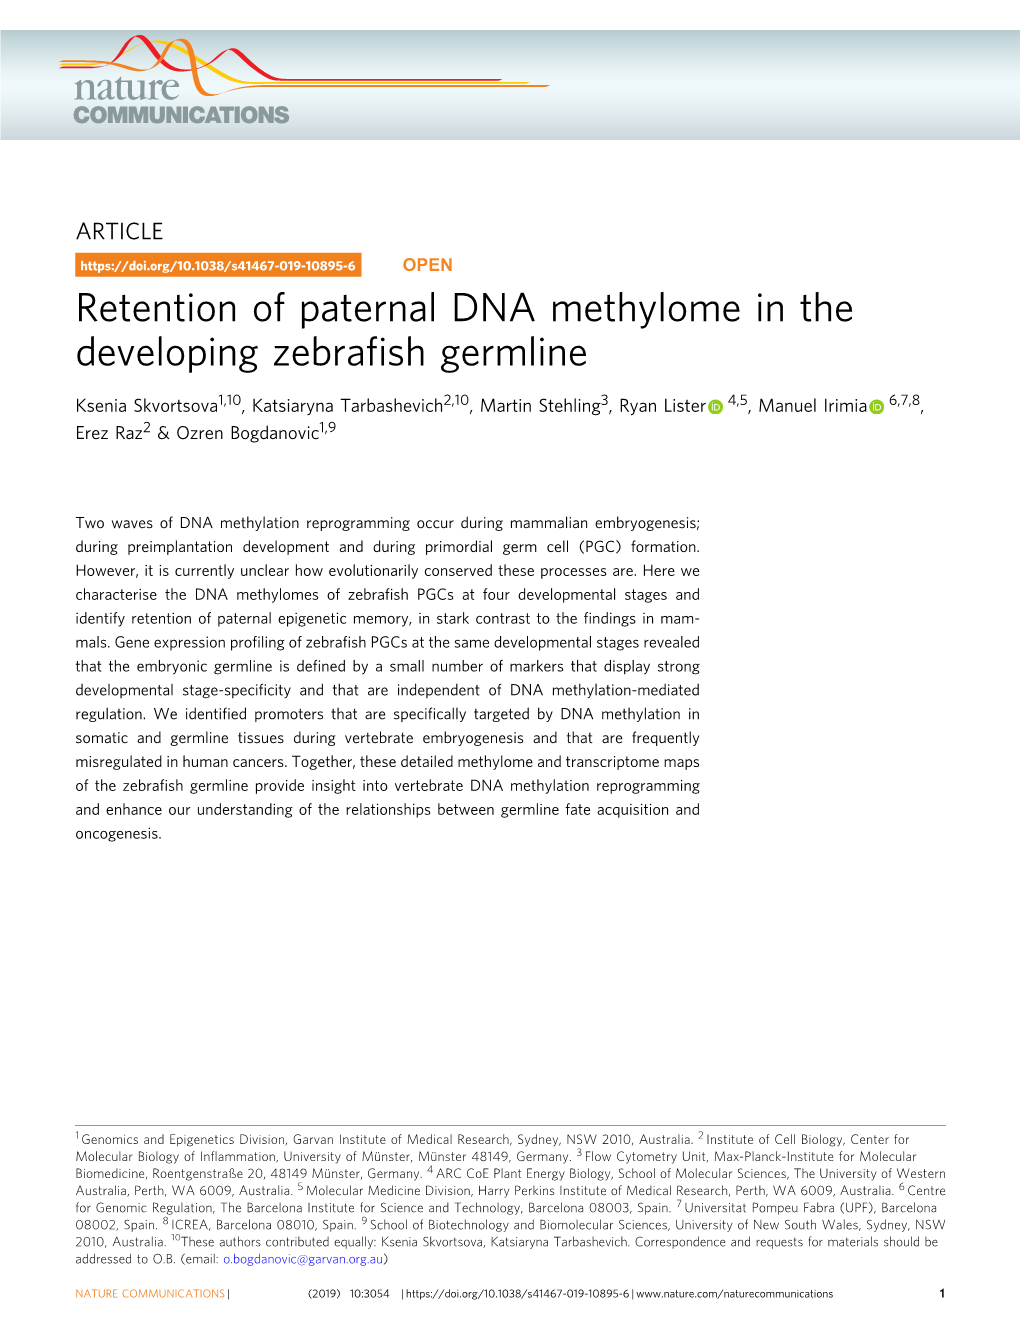 Retention of Paternal DNA Methylome in the Developing Zebraﬁsh Germline